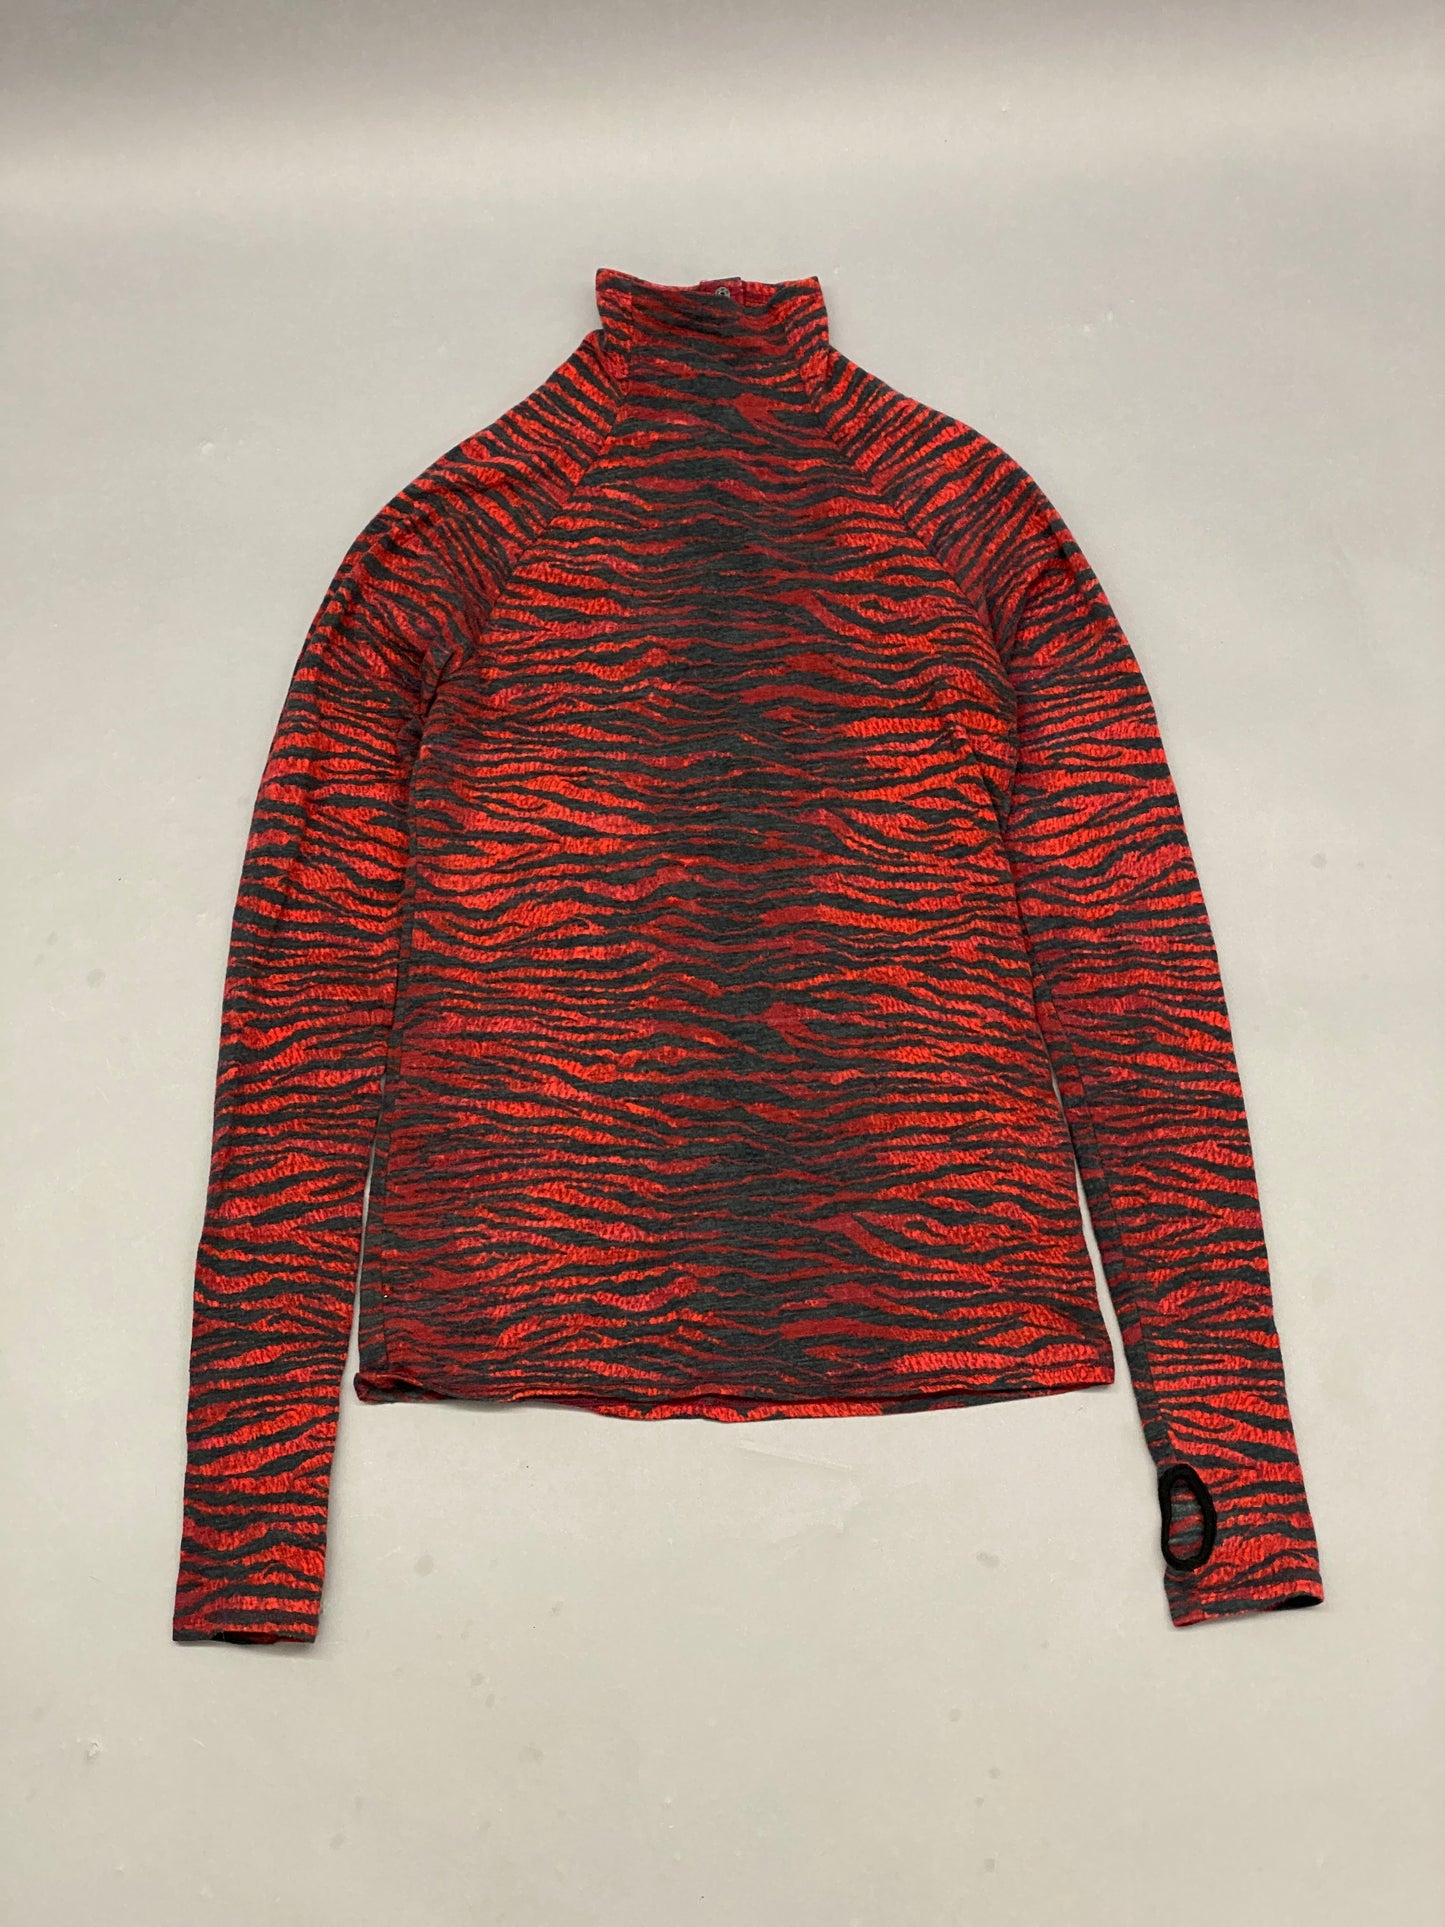 Top Kenzo x HM Animal Print Red Long Sleeve